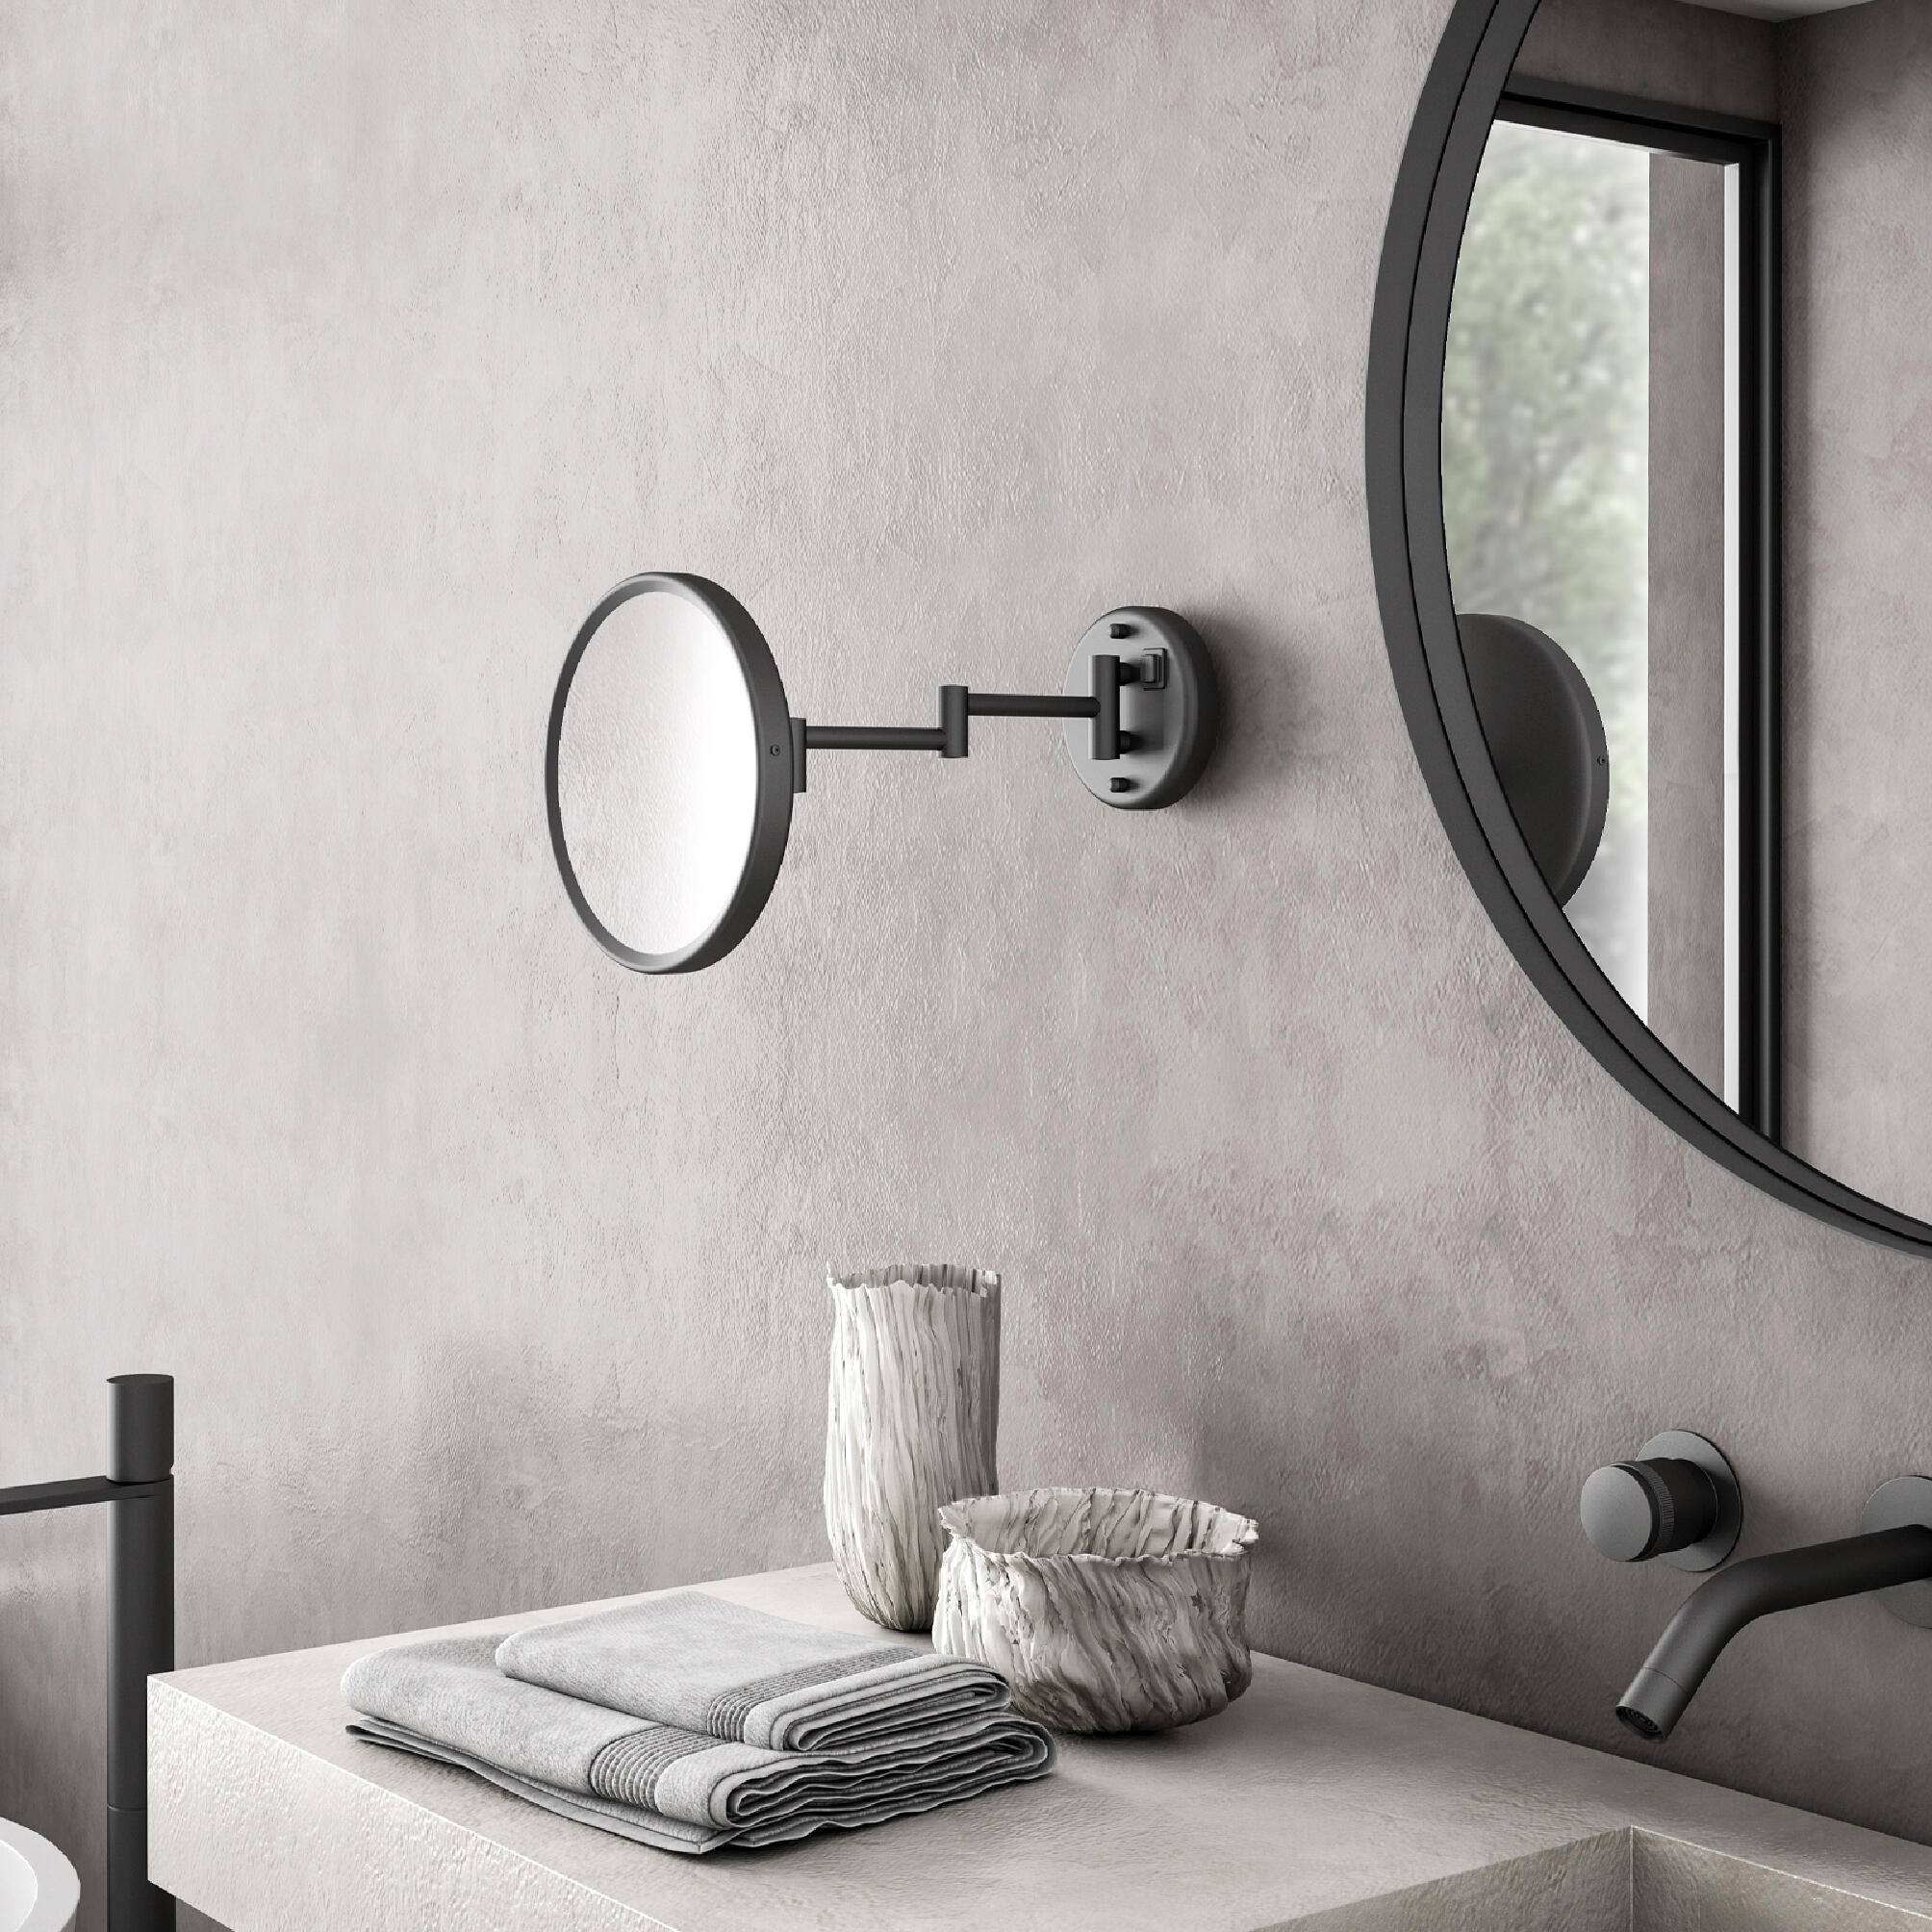 Espejo cosmético de aumento con luz sarah x 3 gris / plata